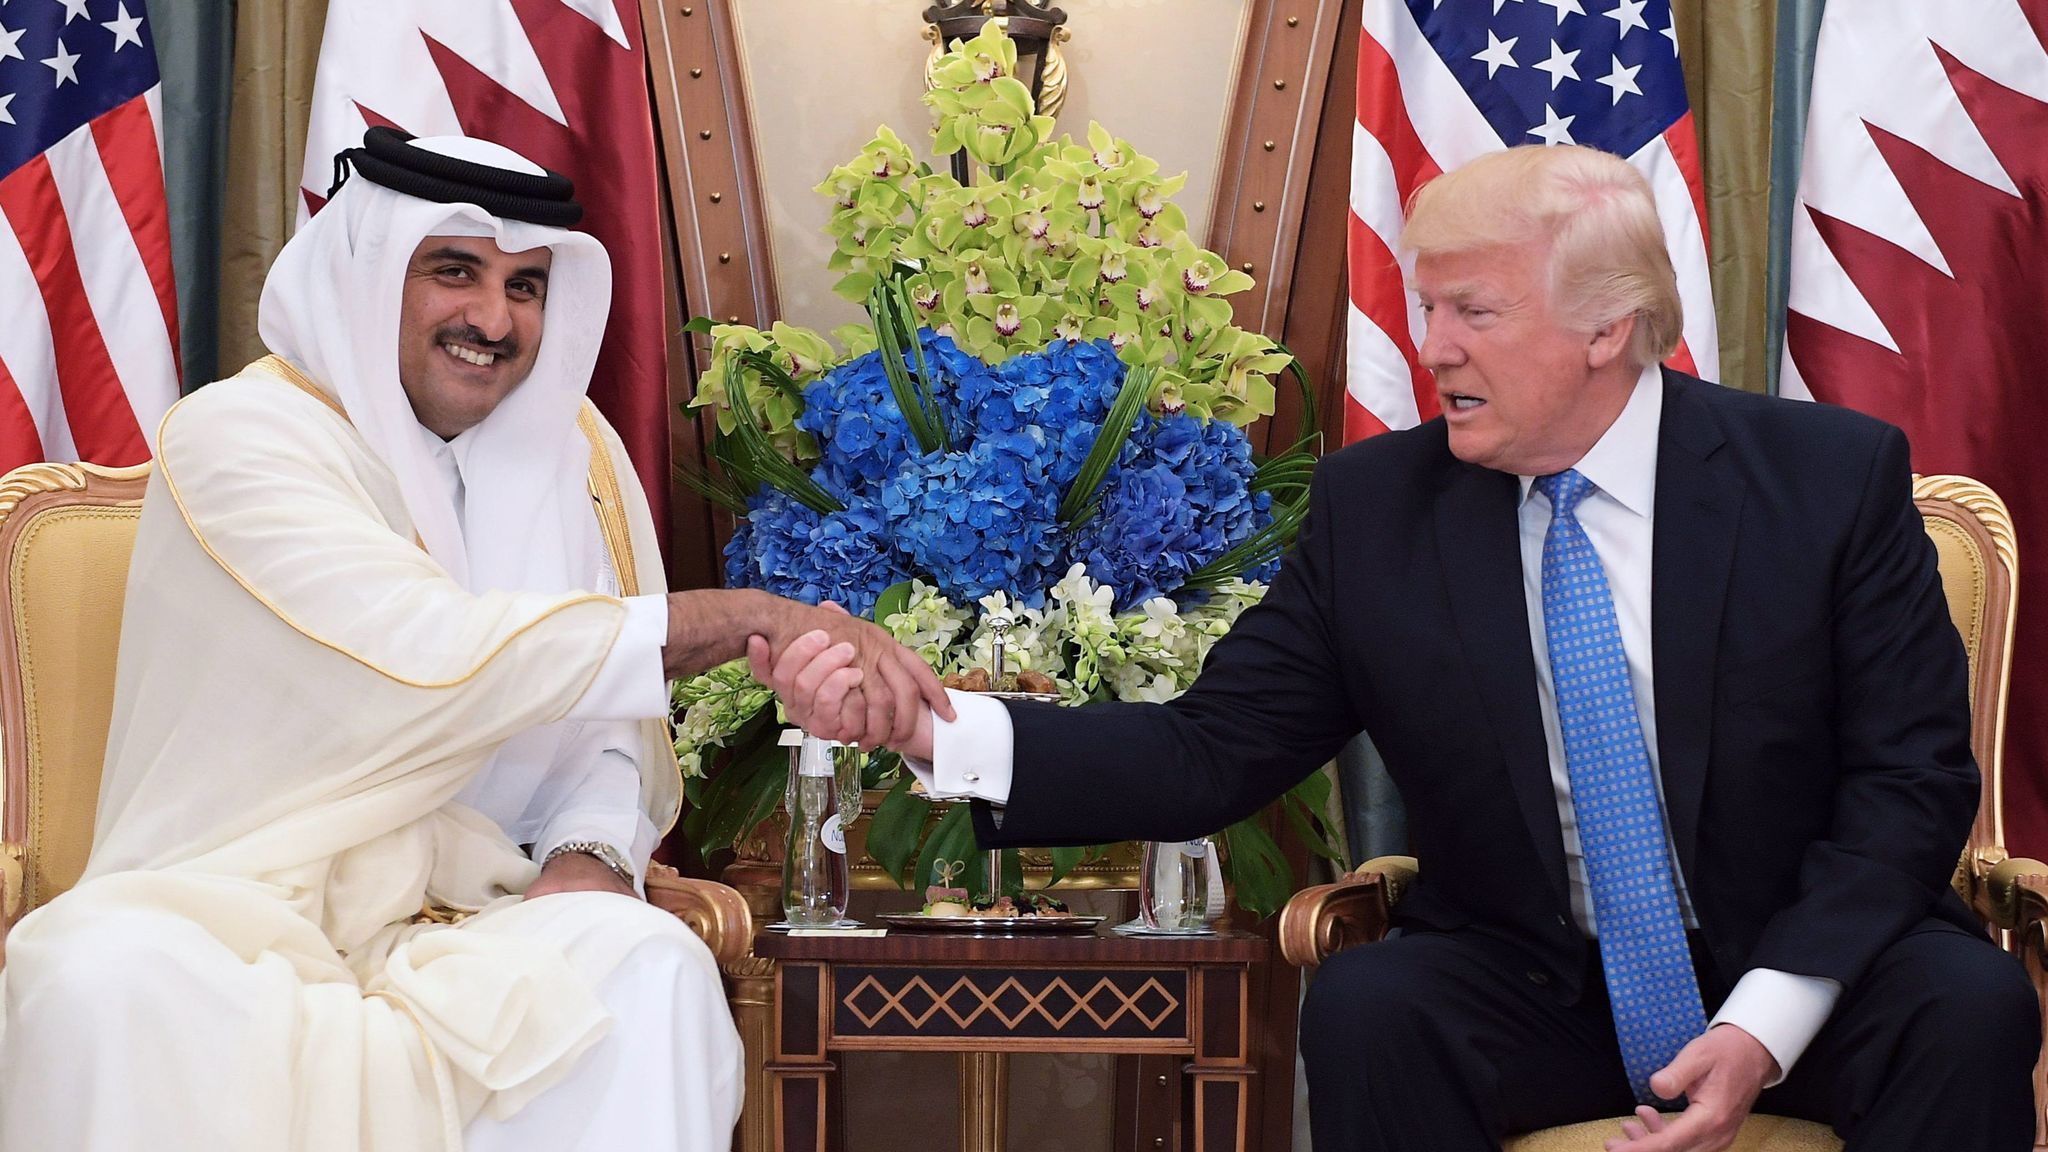 President Trump and Qatar's Emir Sheik Tamim bin Hamad al Thani during a bilateral meeting at a hotel in the Saudi capital, Riyadh, in May 2017.